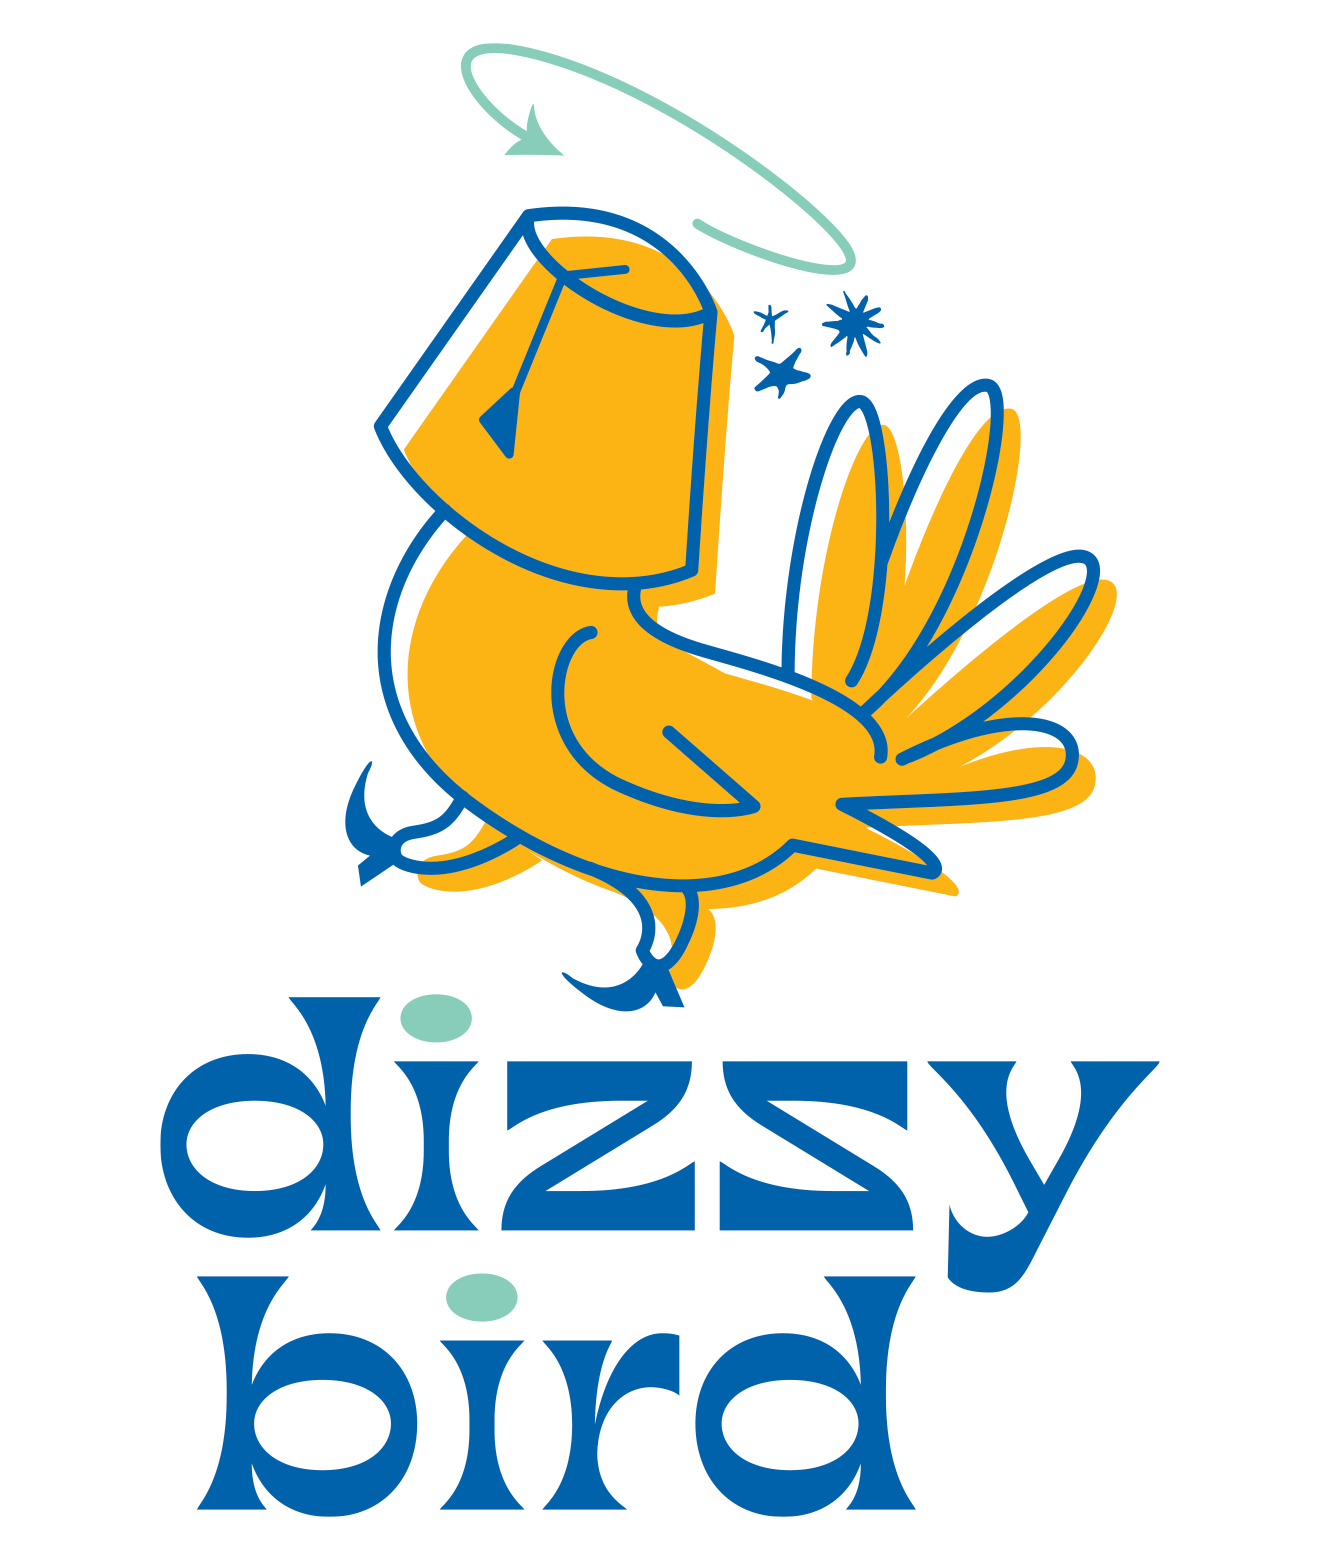 Dizzy bird fast casual restaurant branding packaging design11